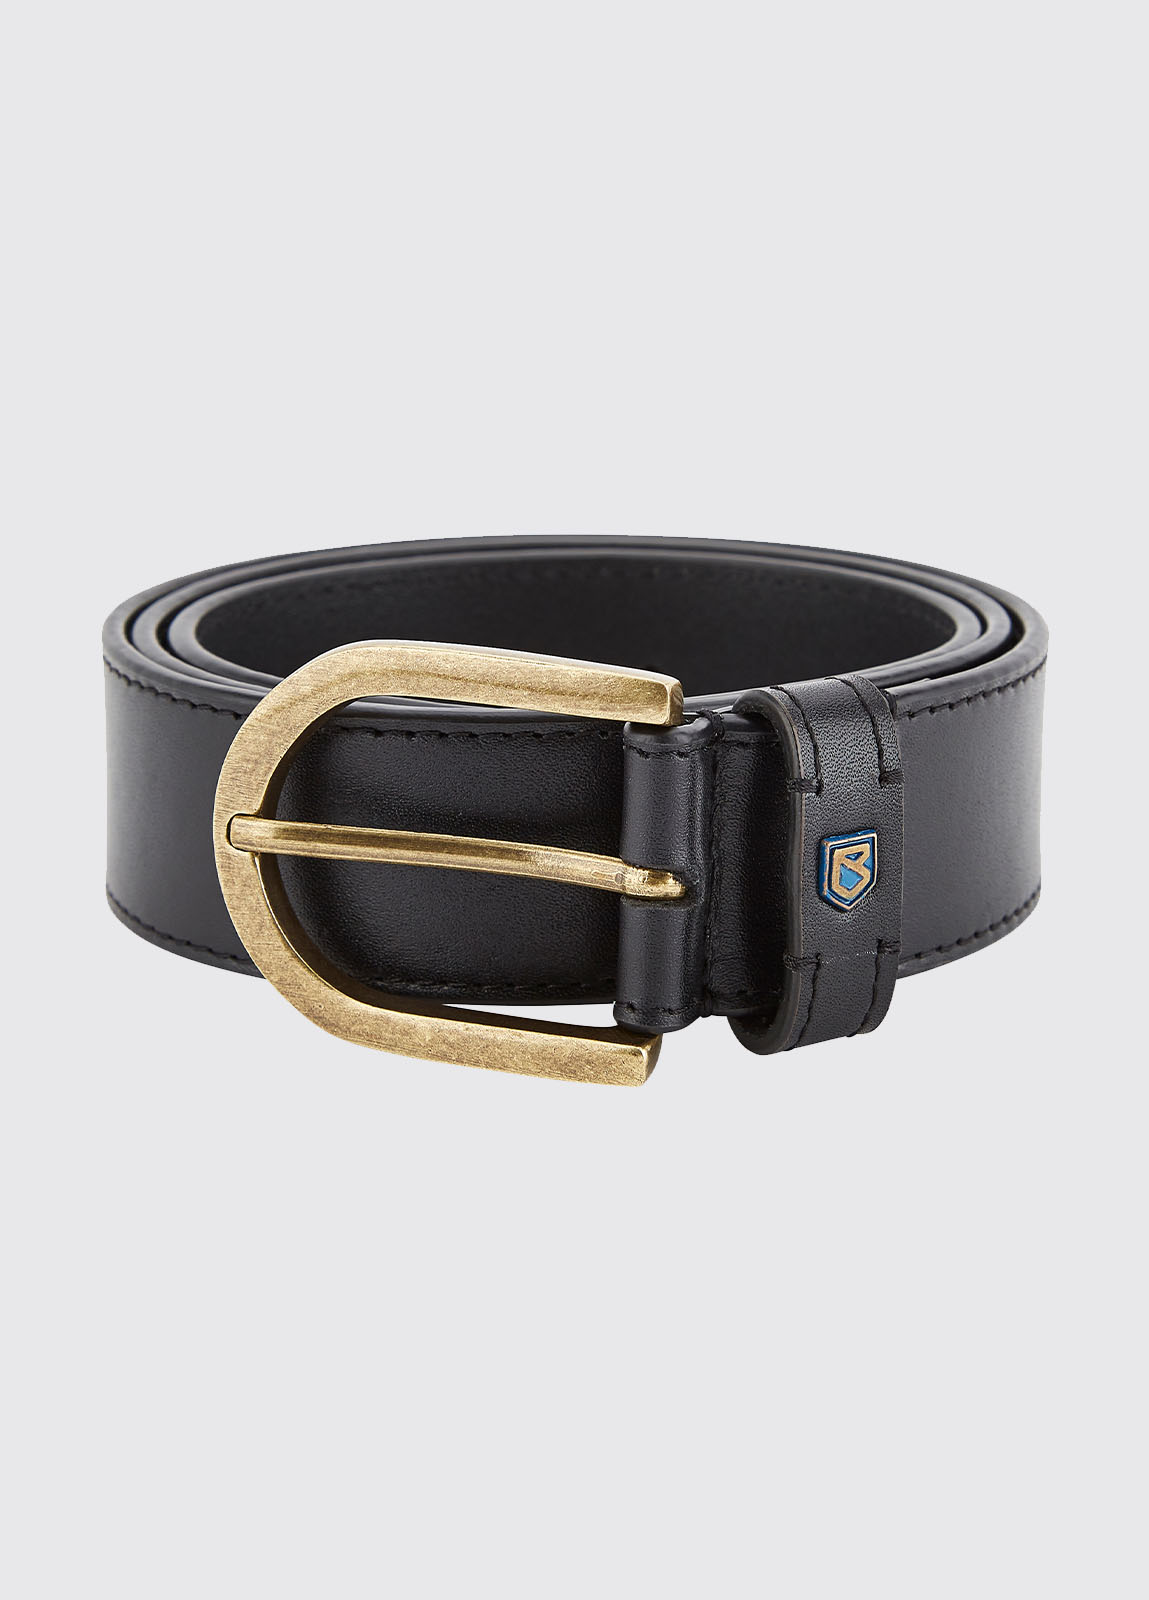 Porthall Leather Belt - Black